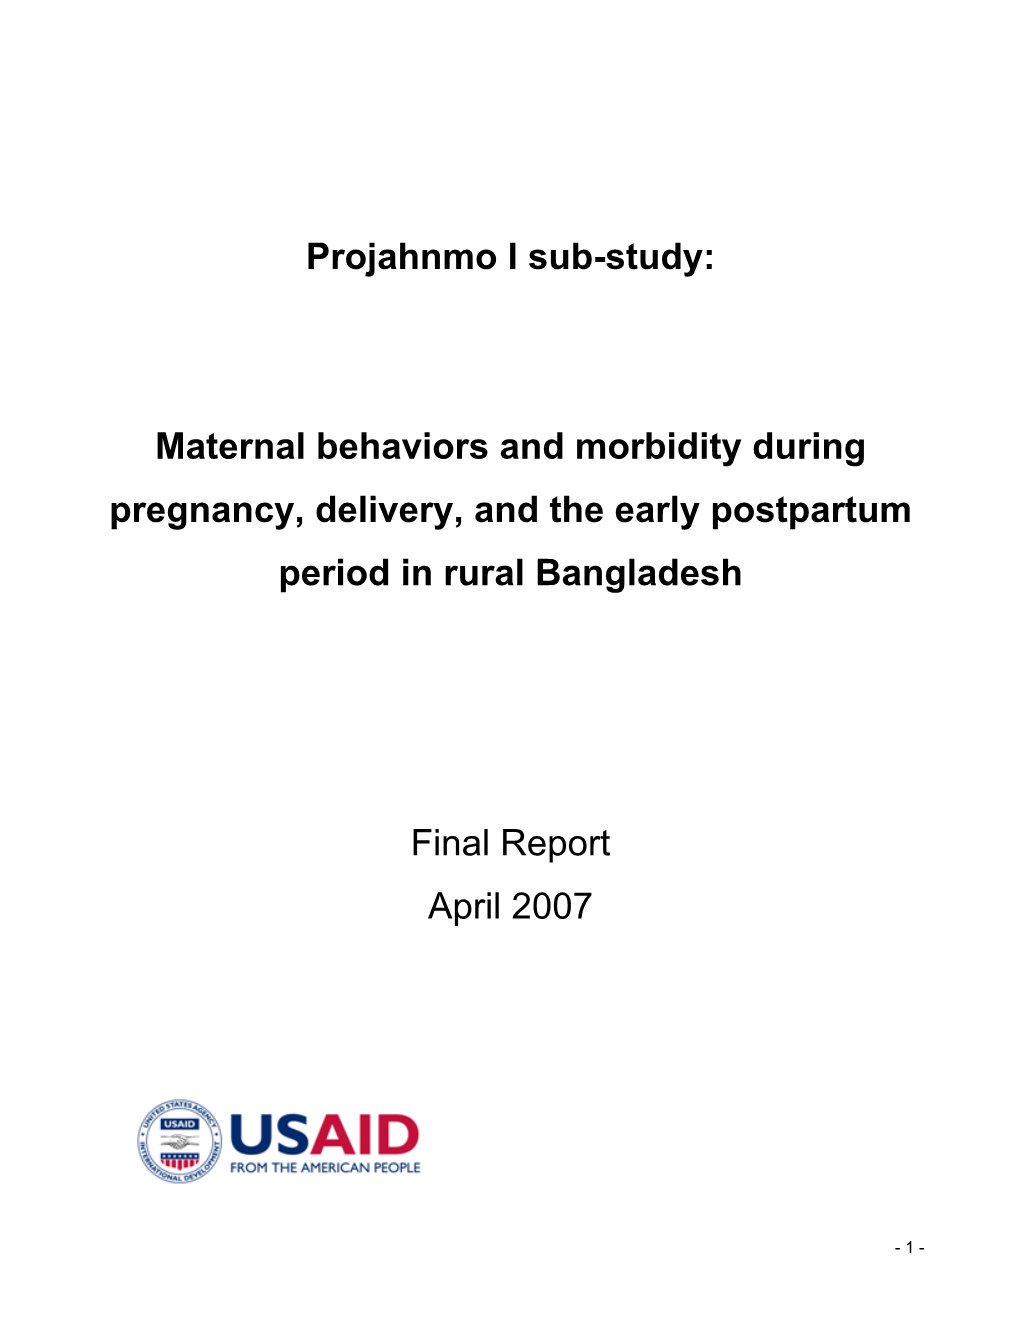 Projahnmo I Sub-Study: Maternal Behaviors and Morbidity During